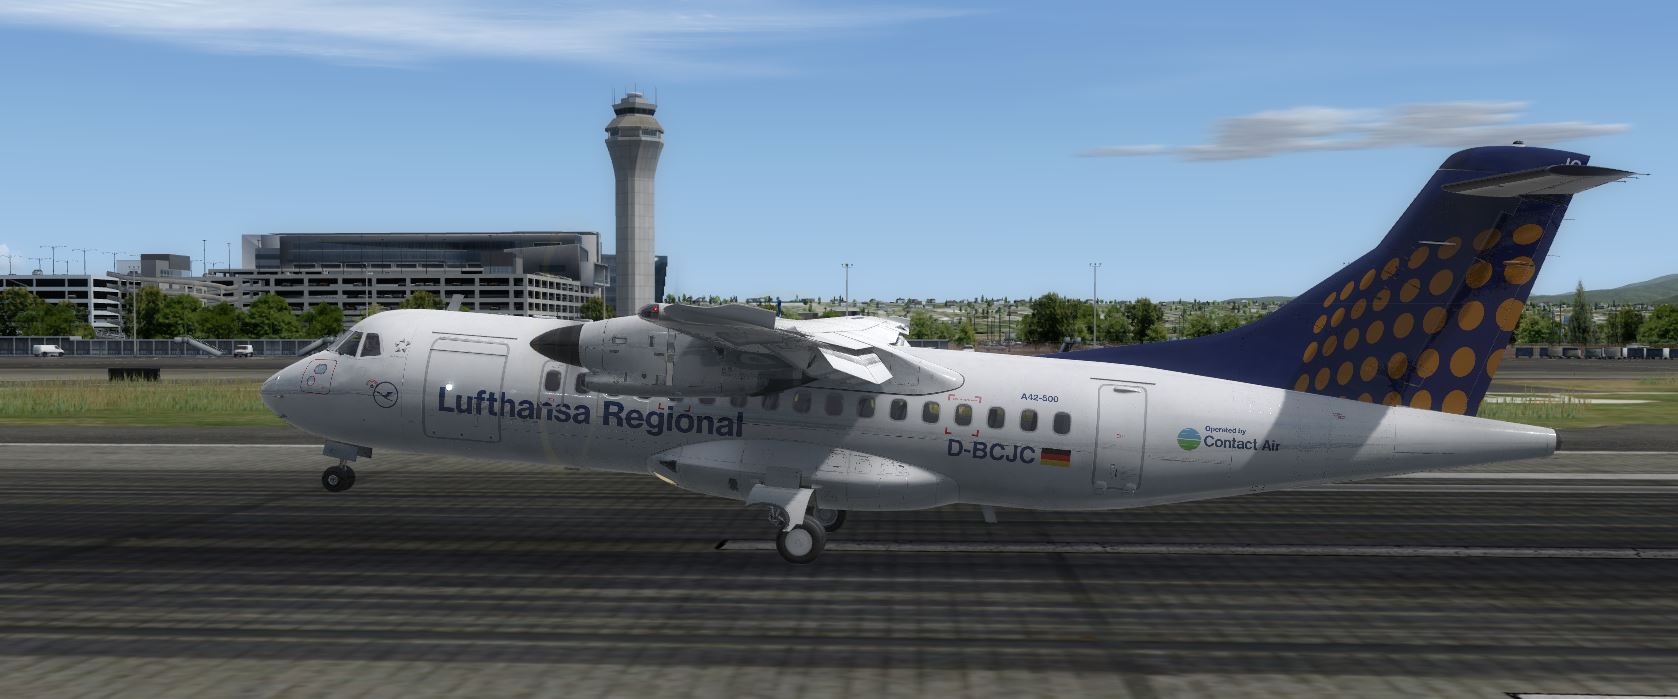 ATR42-500 Lufthansa-6035 